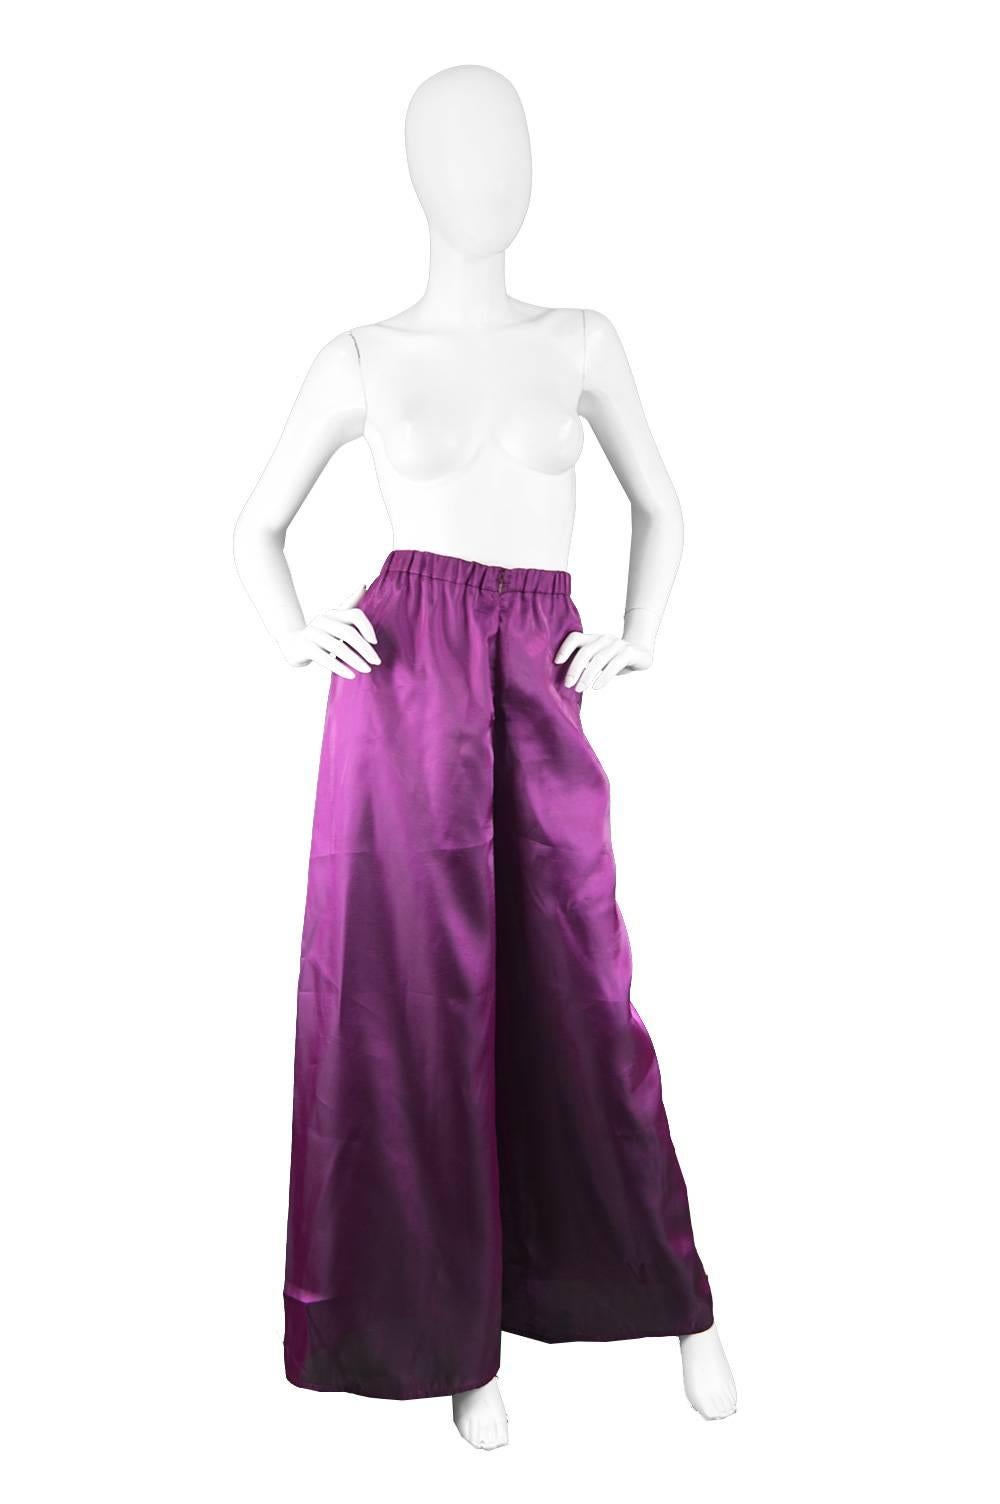 Christian Lacroix Vintage Wide Leg Irridescent Purple Palazzo Pants, 1990s

Size: Marked EU 42 which is roughly a UK 14/ US 10. Please check measurements
Waist - 30-32” / 76-81cm
Hips - Up to 48” / 122cm
Rise - 15” / 38cm
Inside Leg - 31” /